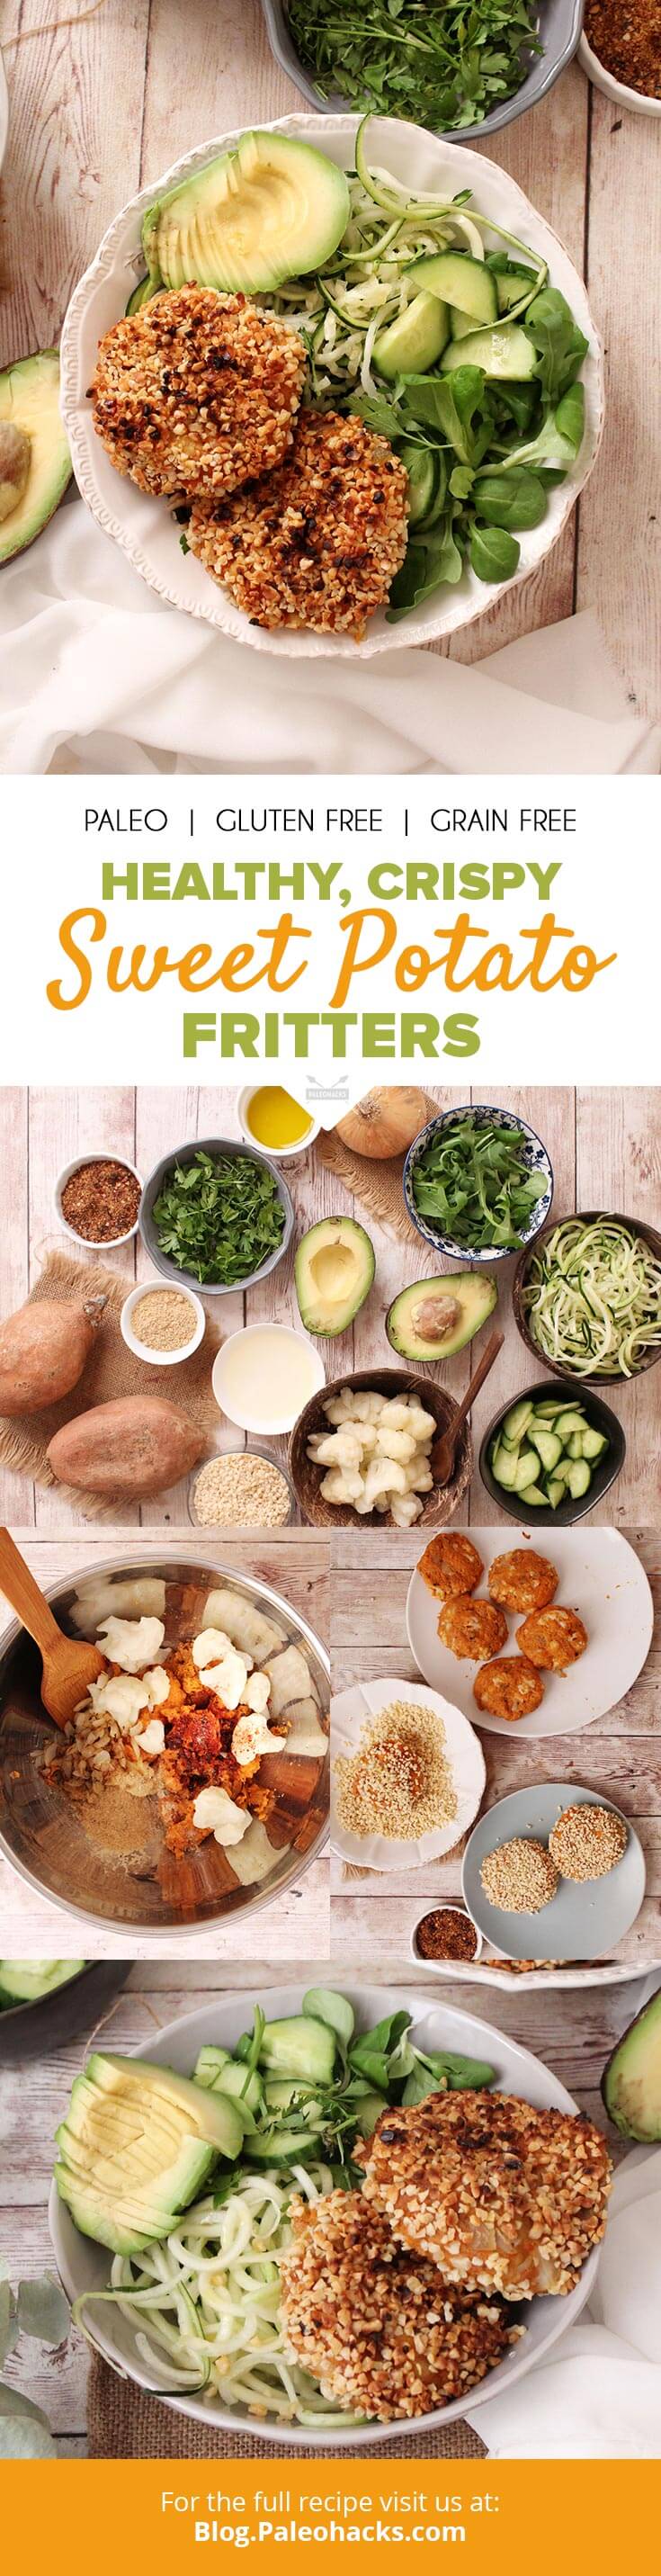 healthy, crispy sweet potato fritters pin